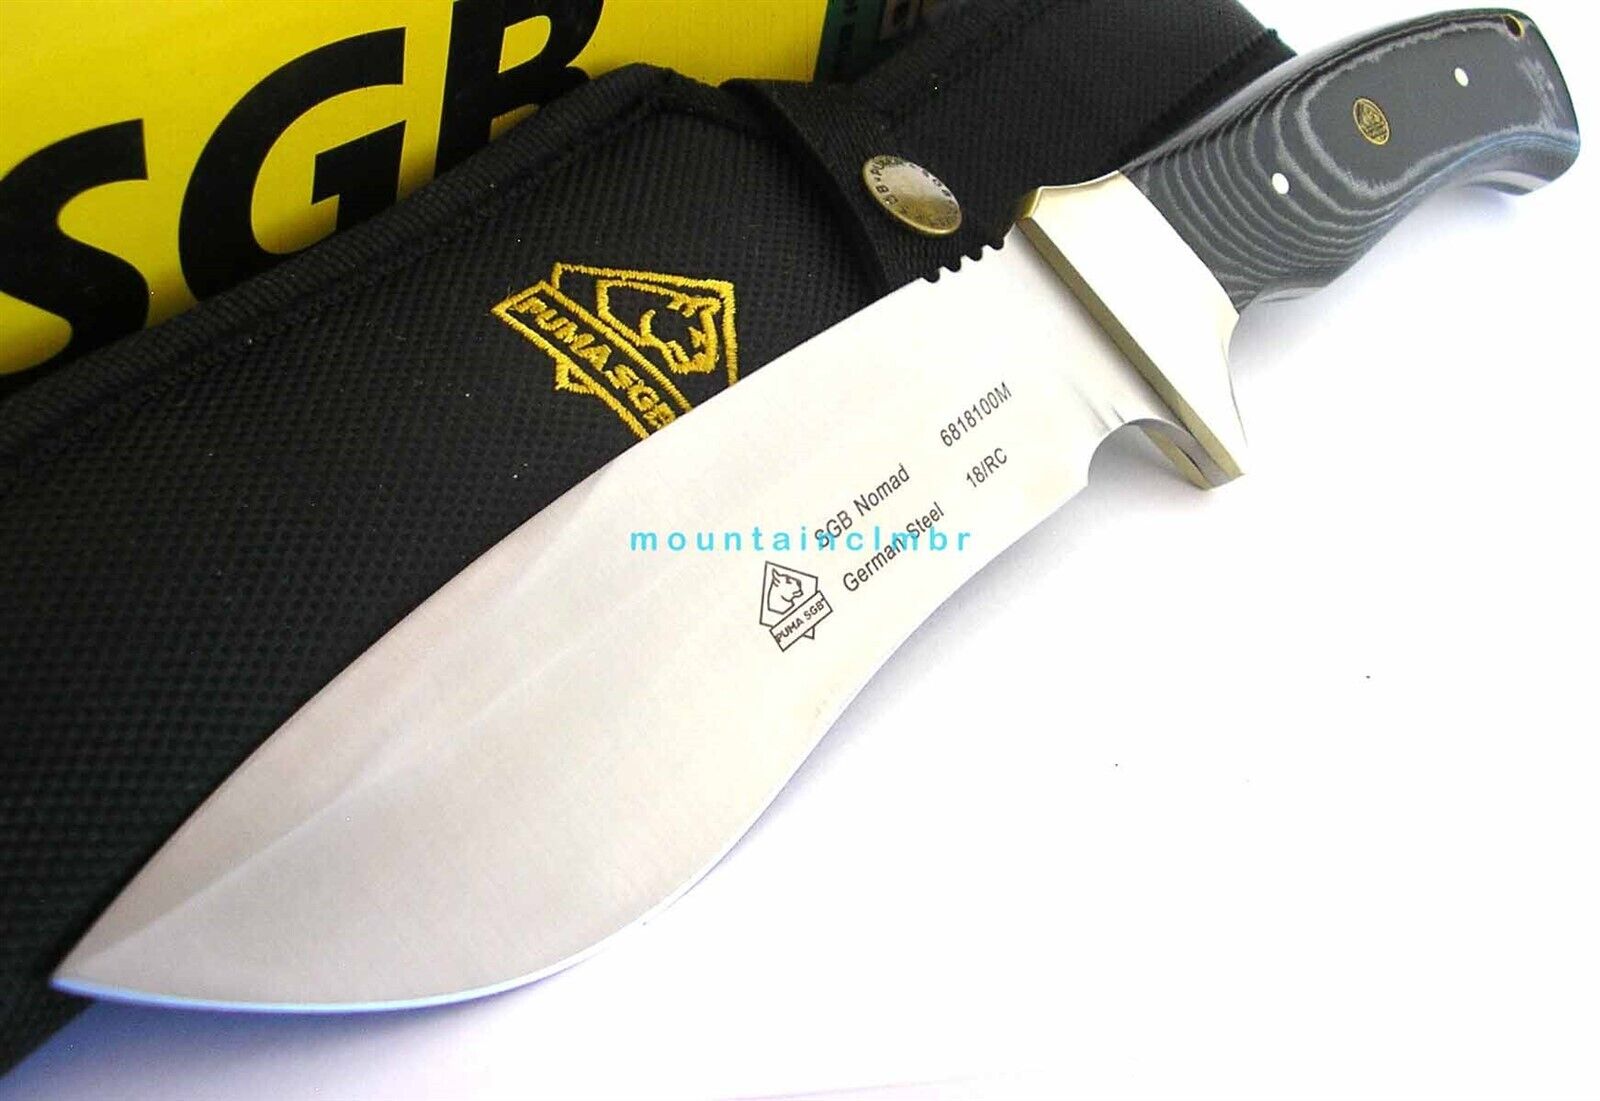 PUMA SGB RARE Nomad Outdoor GermanSteel 12/6.3 Fixed Blade Micarta Knife MINTBOX